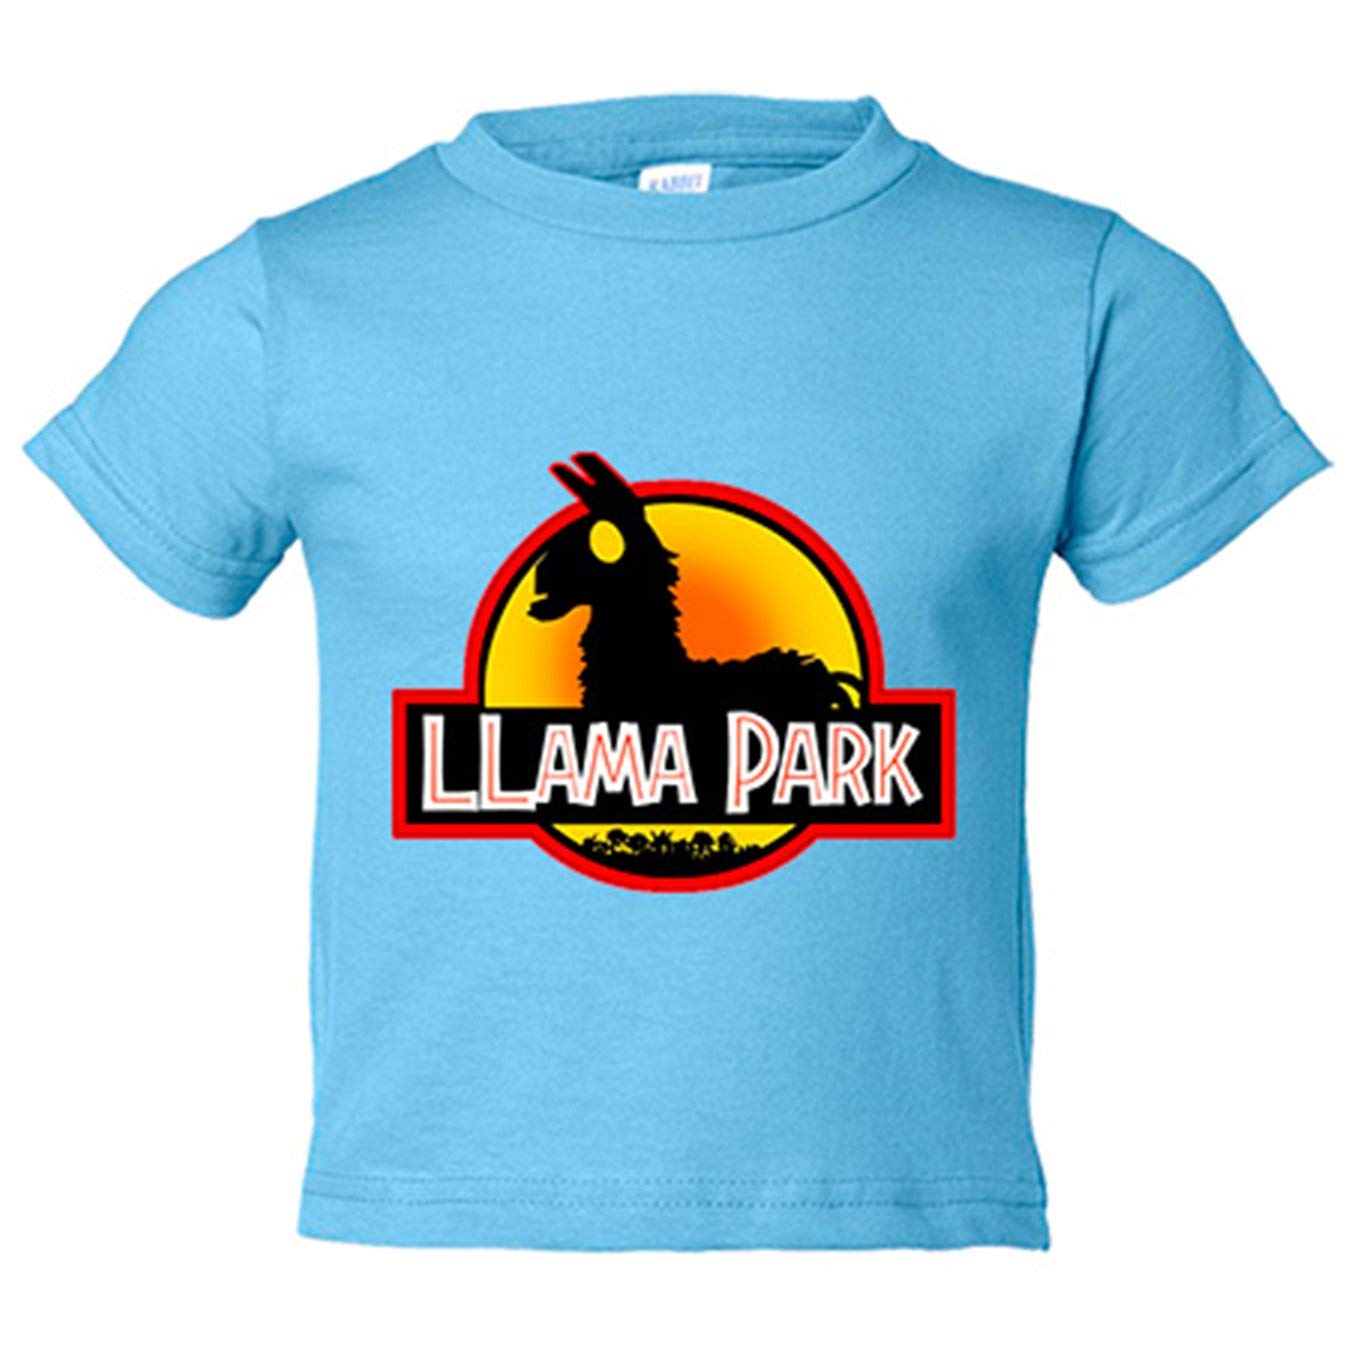 Camiseta Llama Park silueta - Celeste